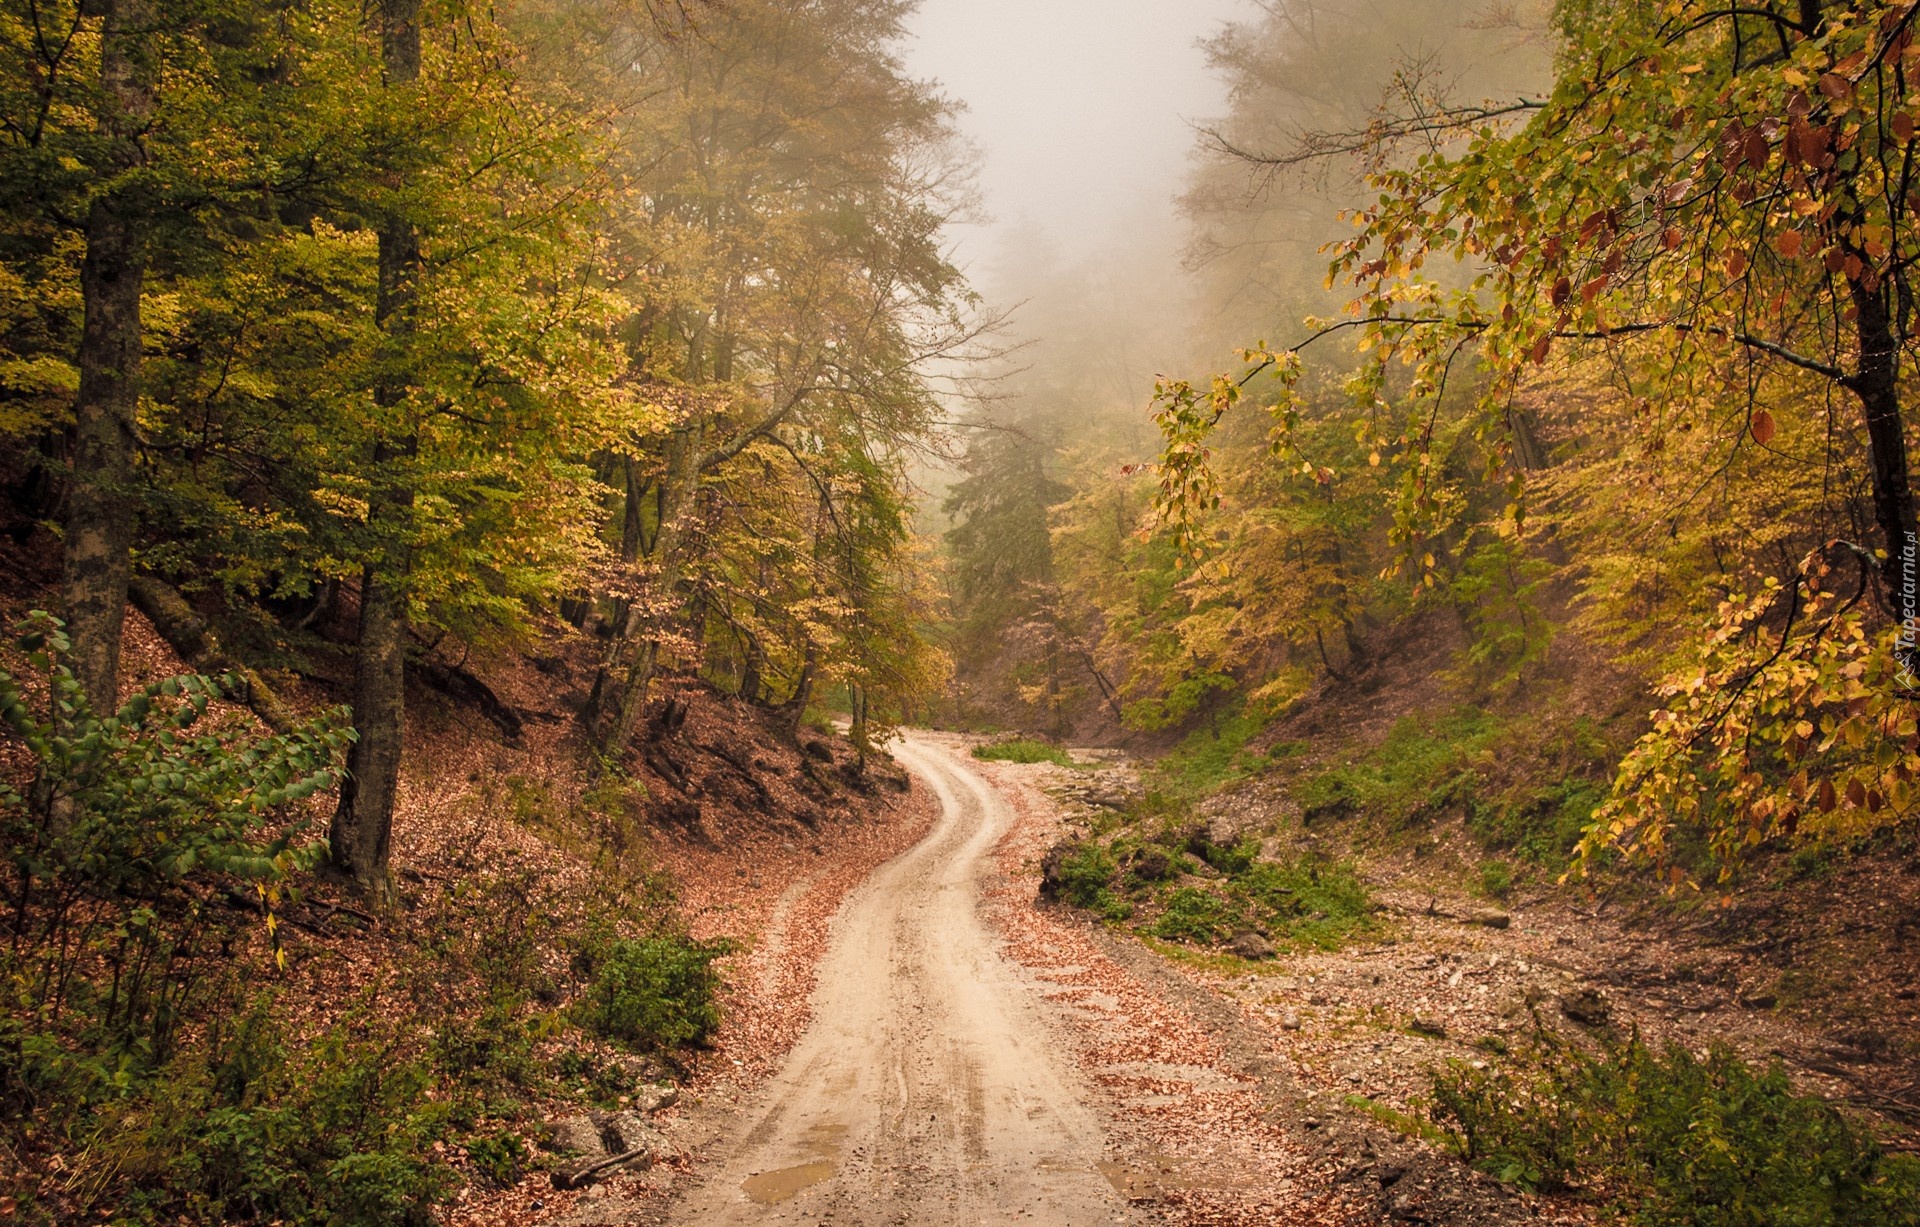 Дорога шла лес озера. Дорога в лесу. Лесная дорога. Старая дорога в лесу. Дорога через лес.